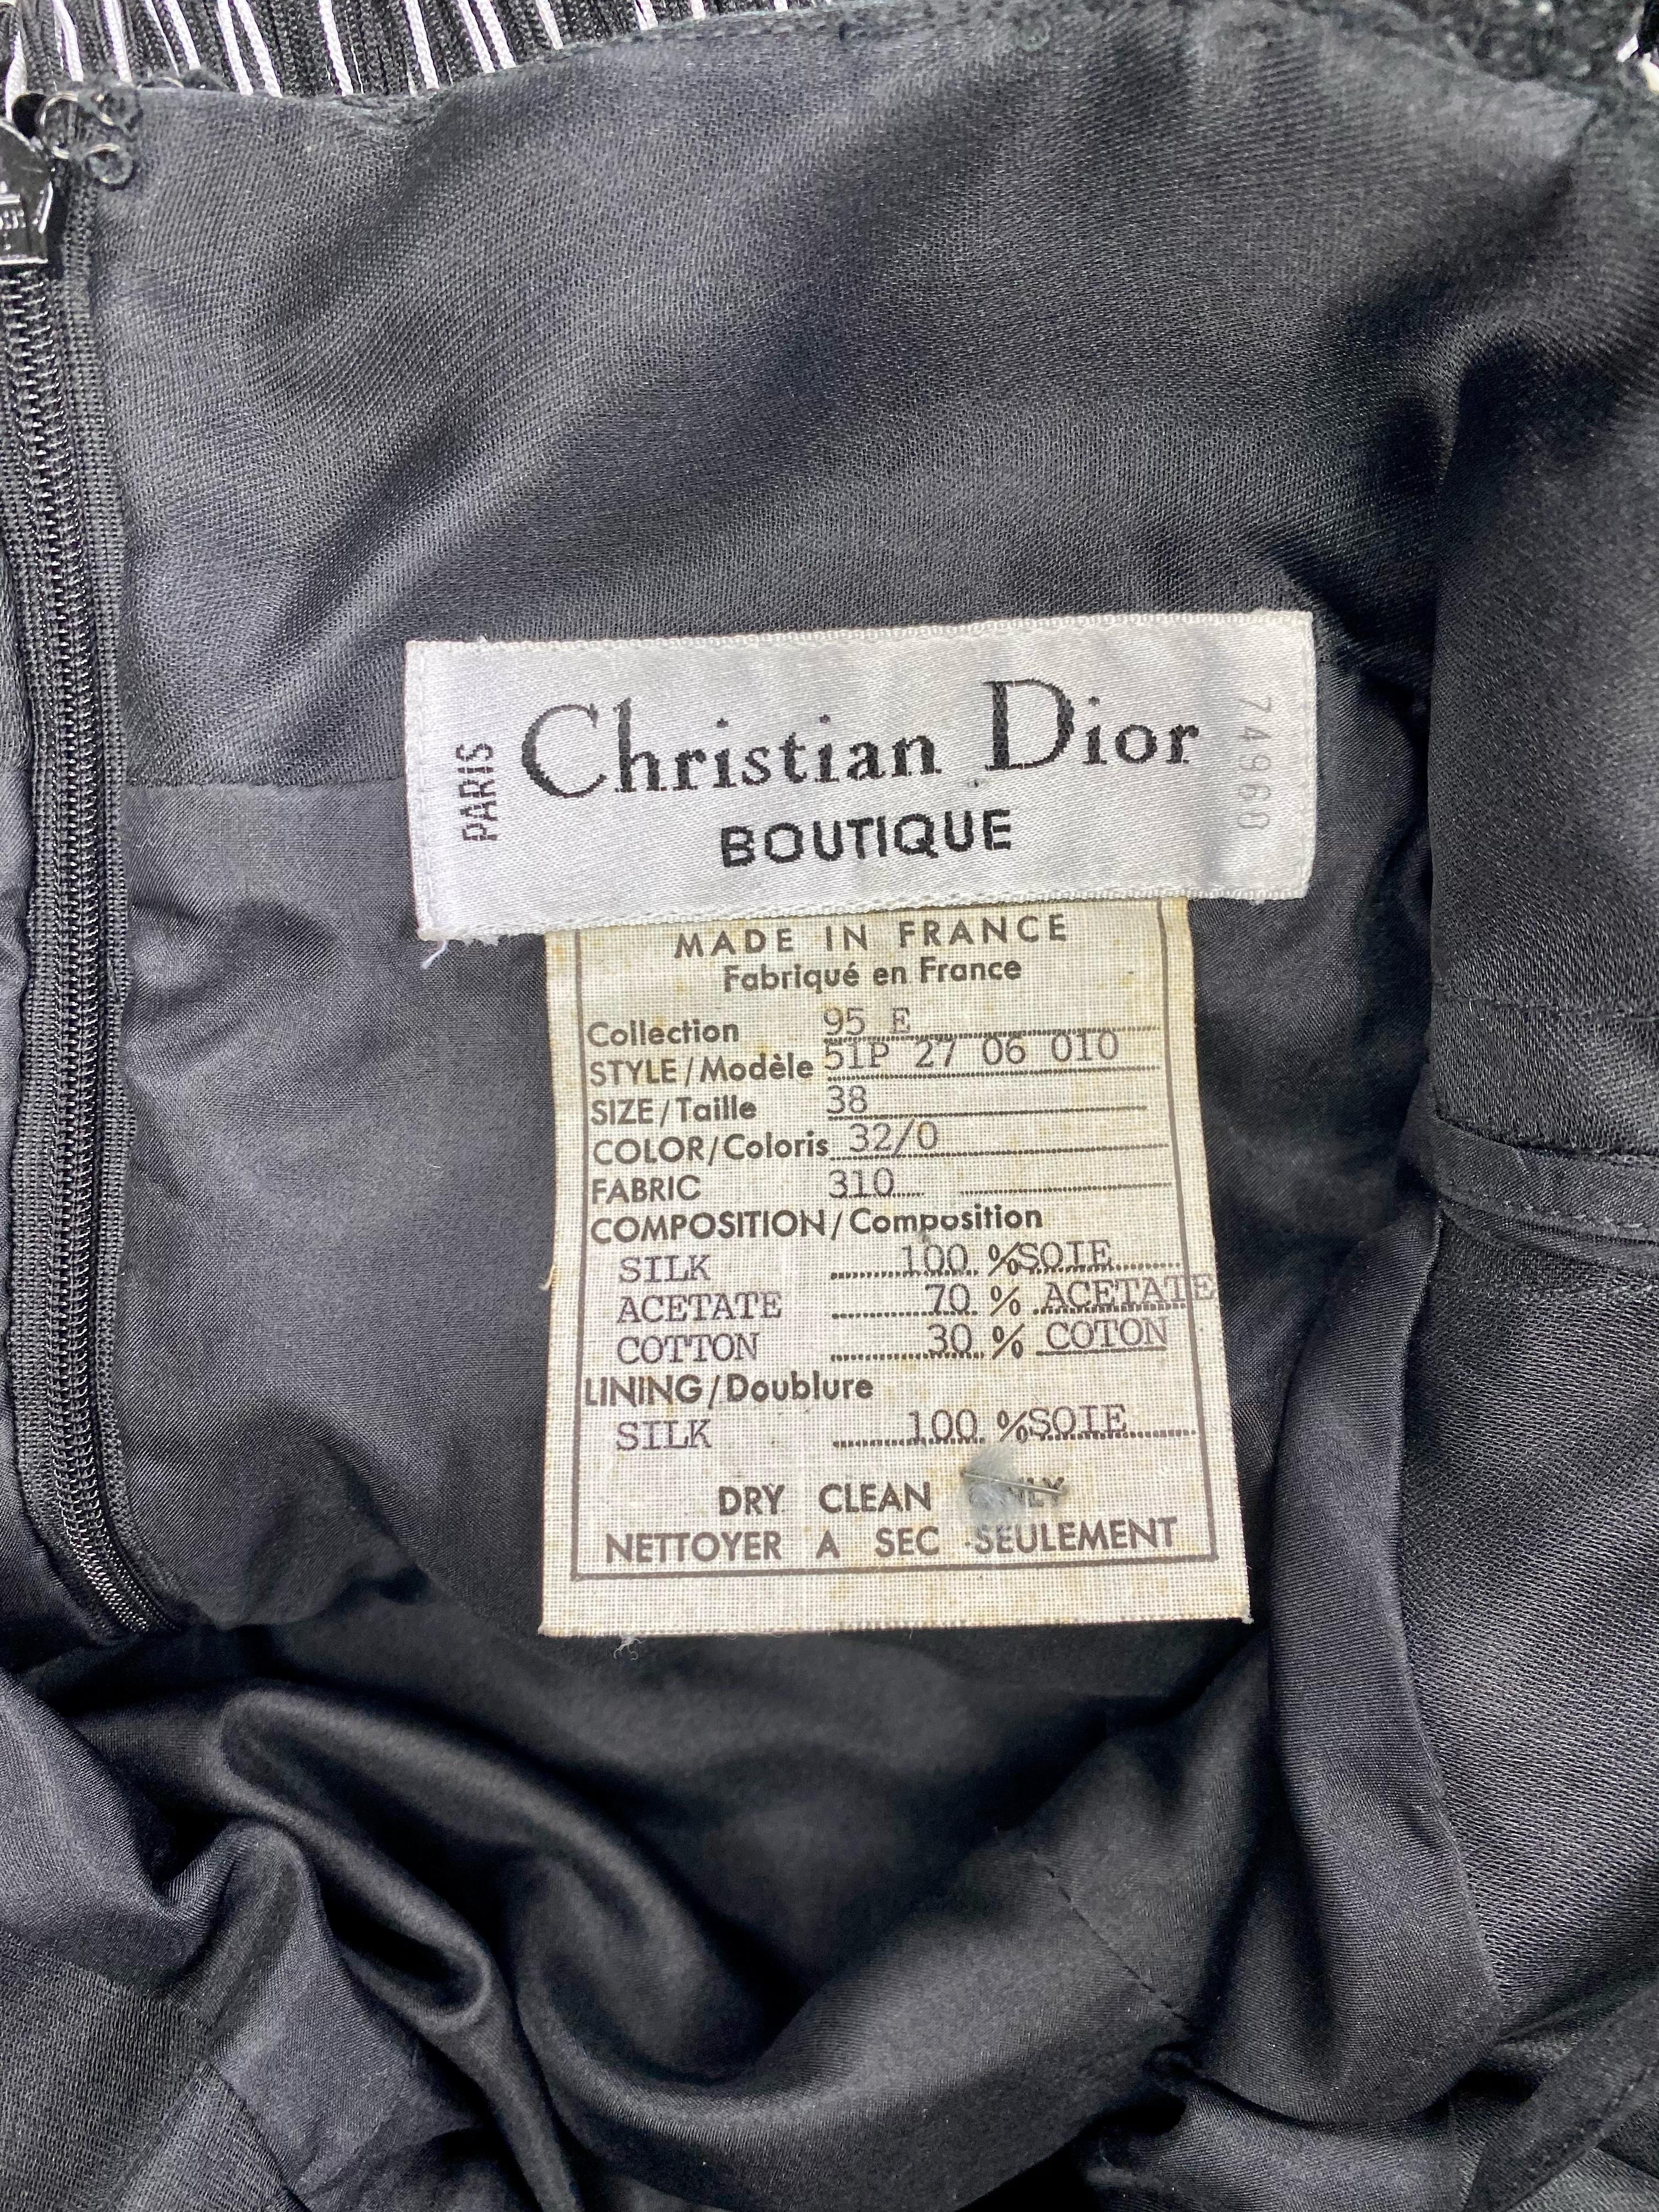 S/S 1995 Christian Dior Fringe Sequin Flapper Mini Dress by Gianfranco Ferré 1